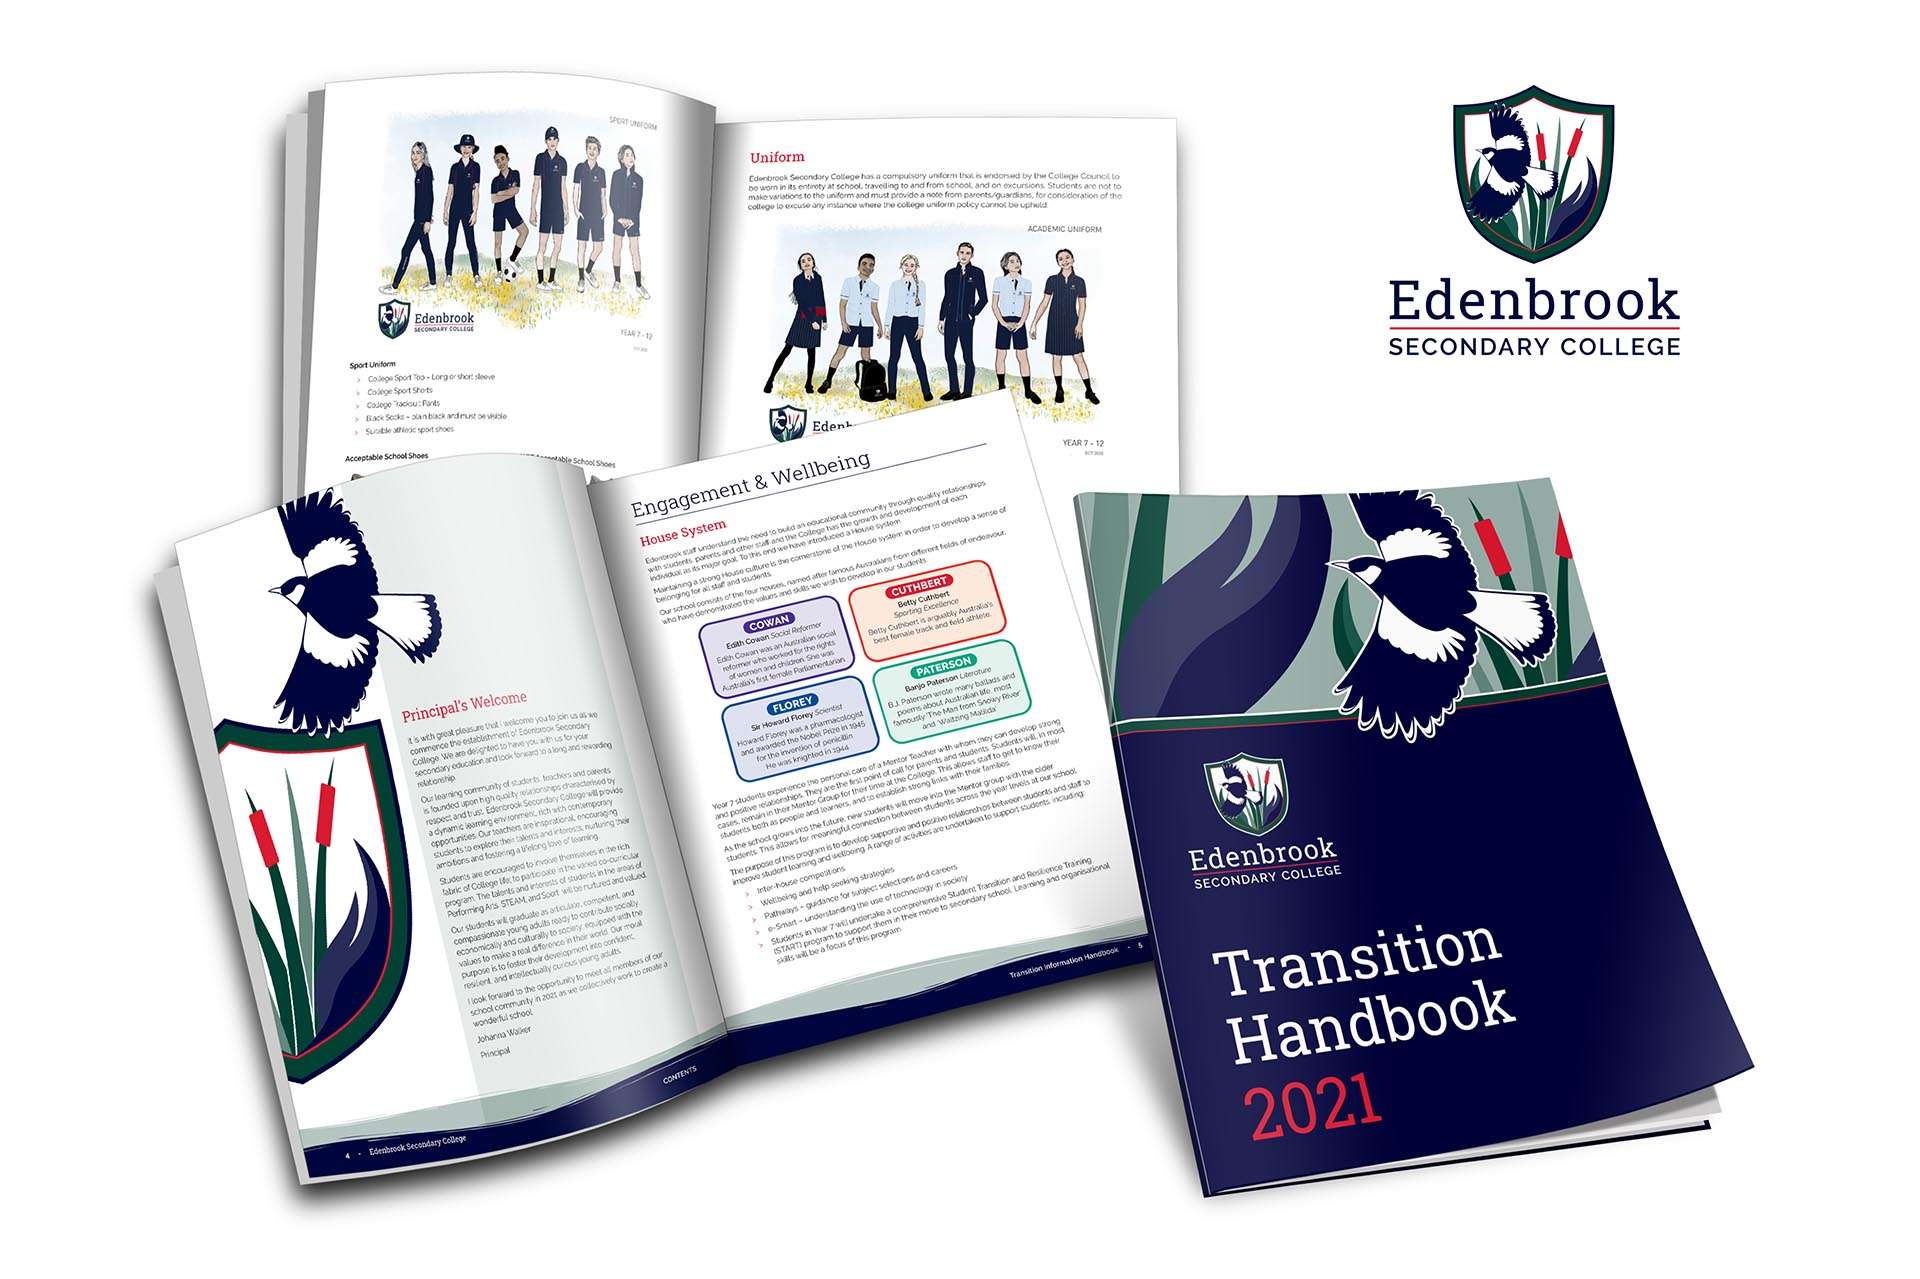 Edenbrook Secondary College Transition Handbook